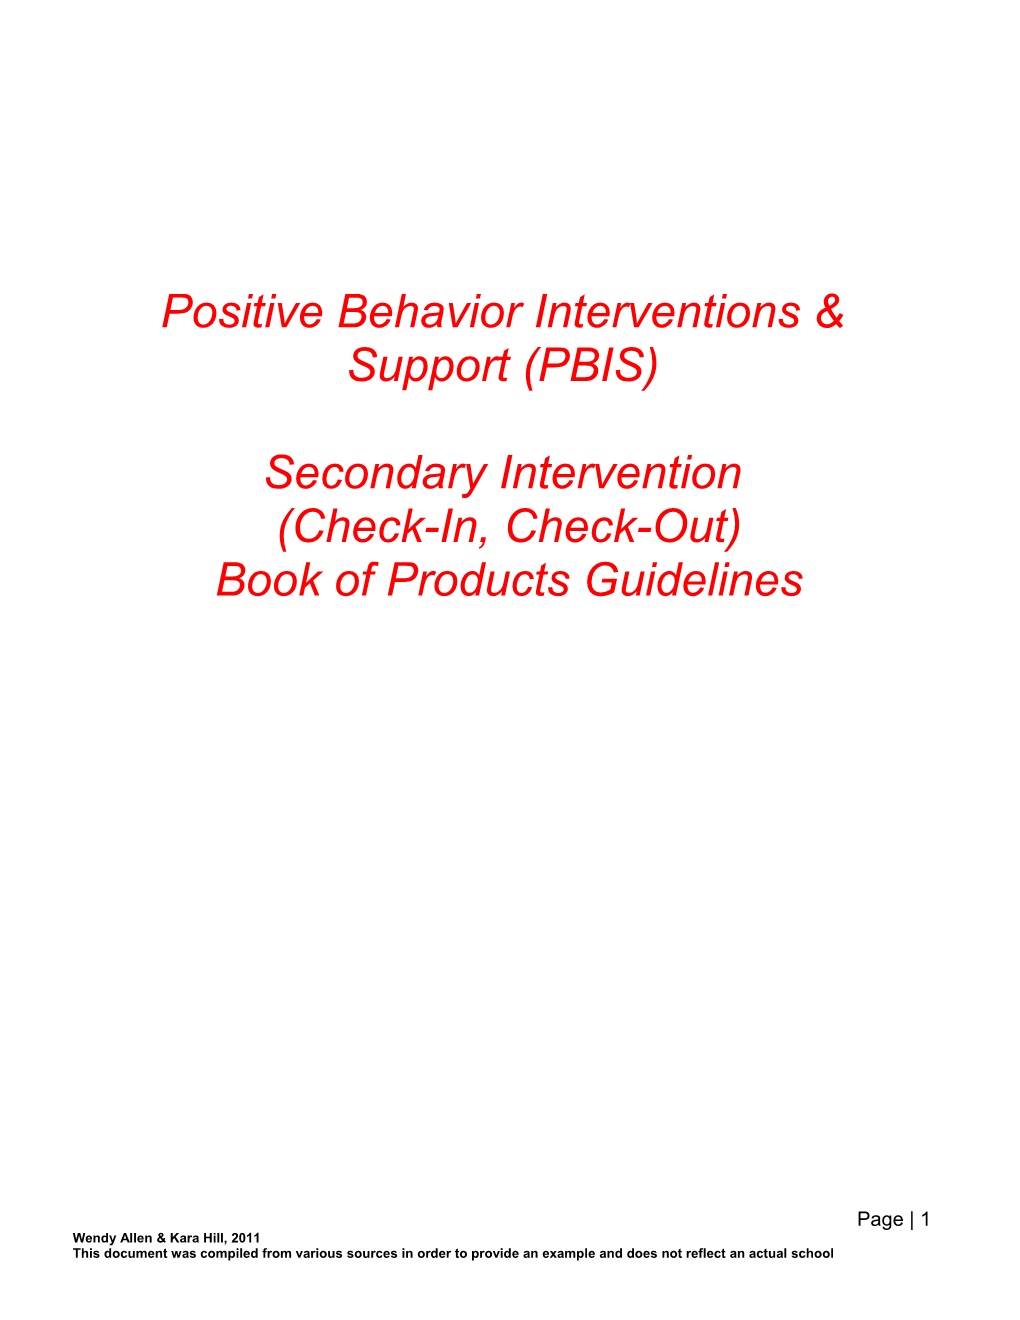 Positive Behavior Interventions & Support (PBIS)